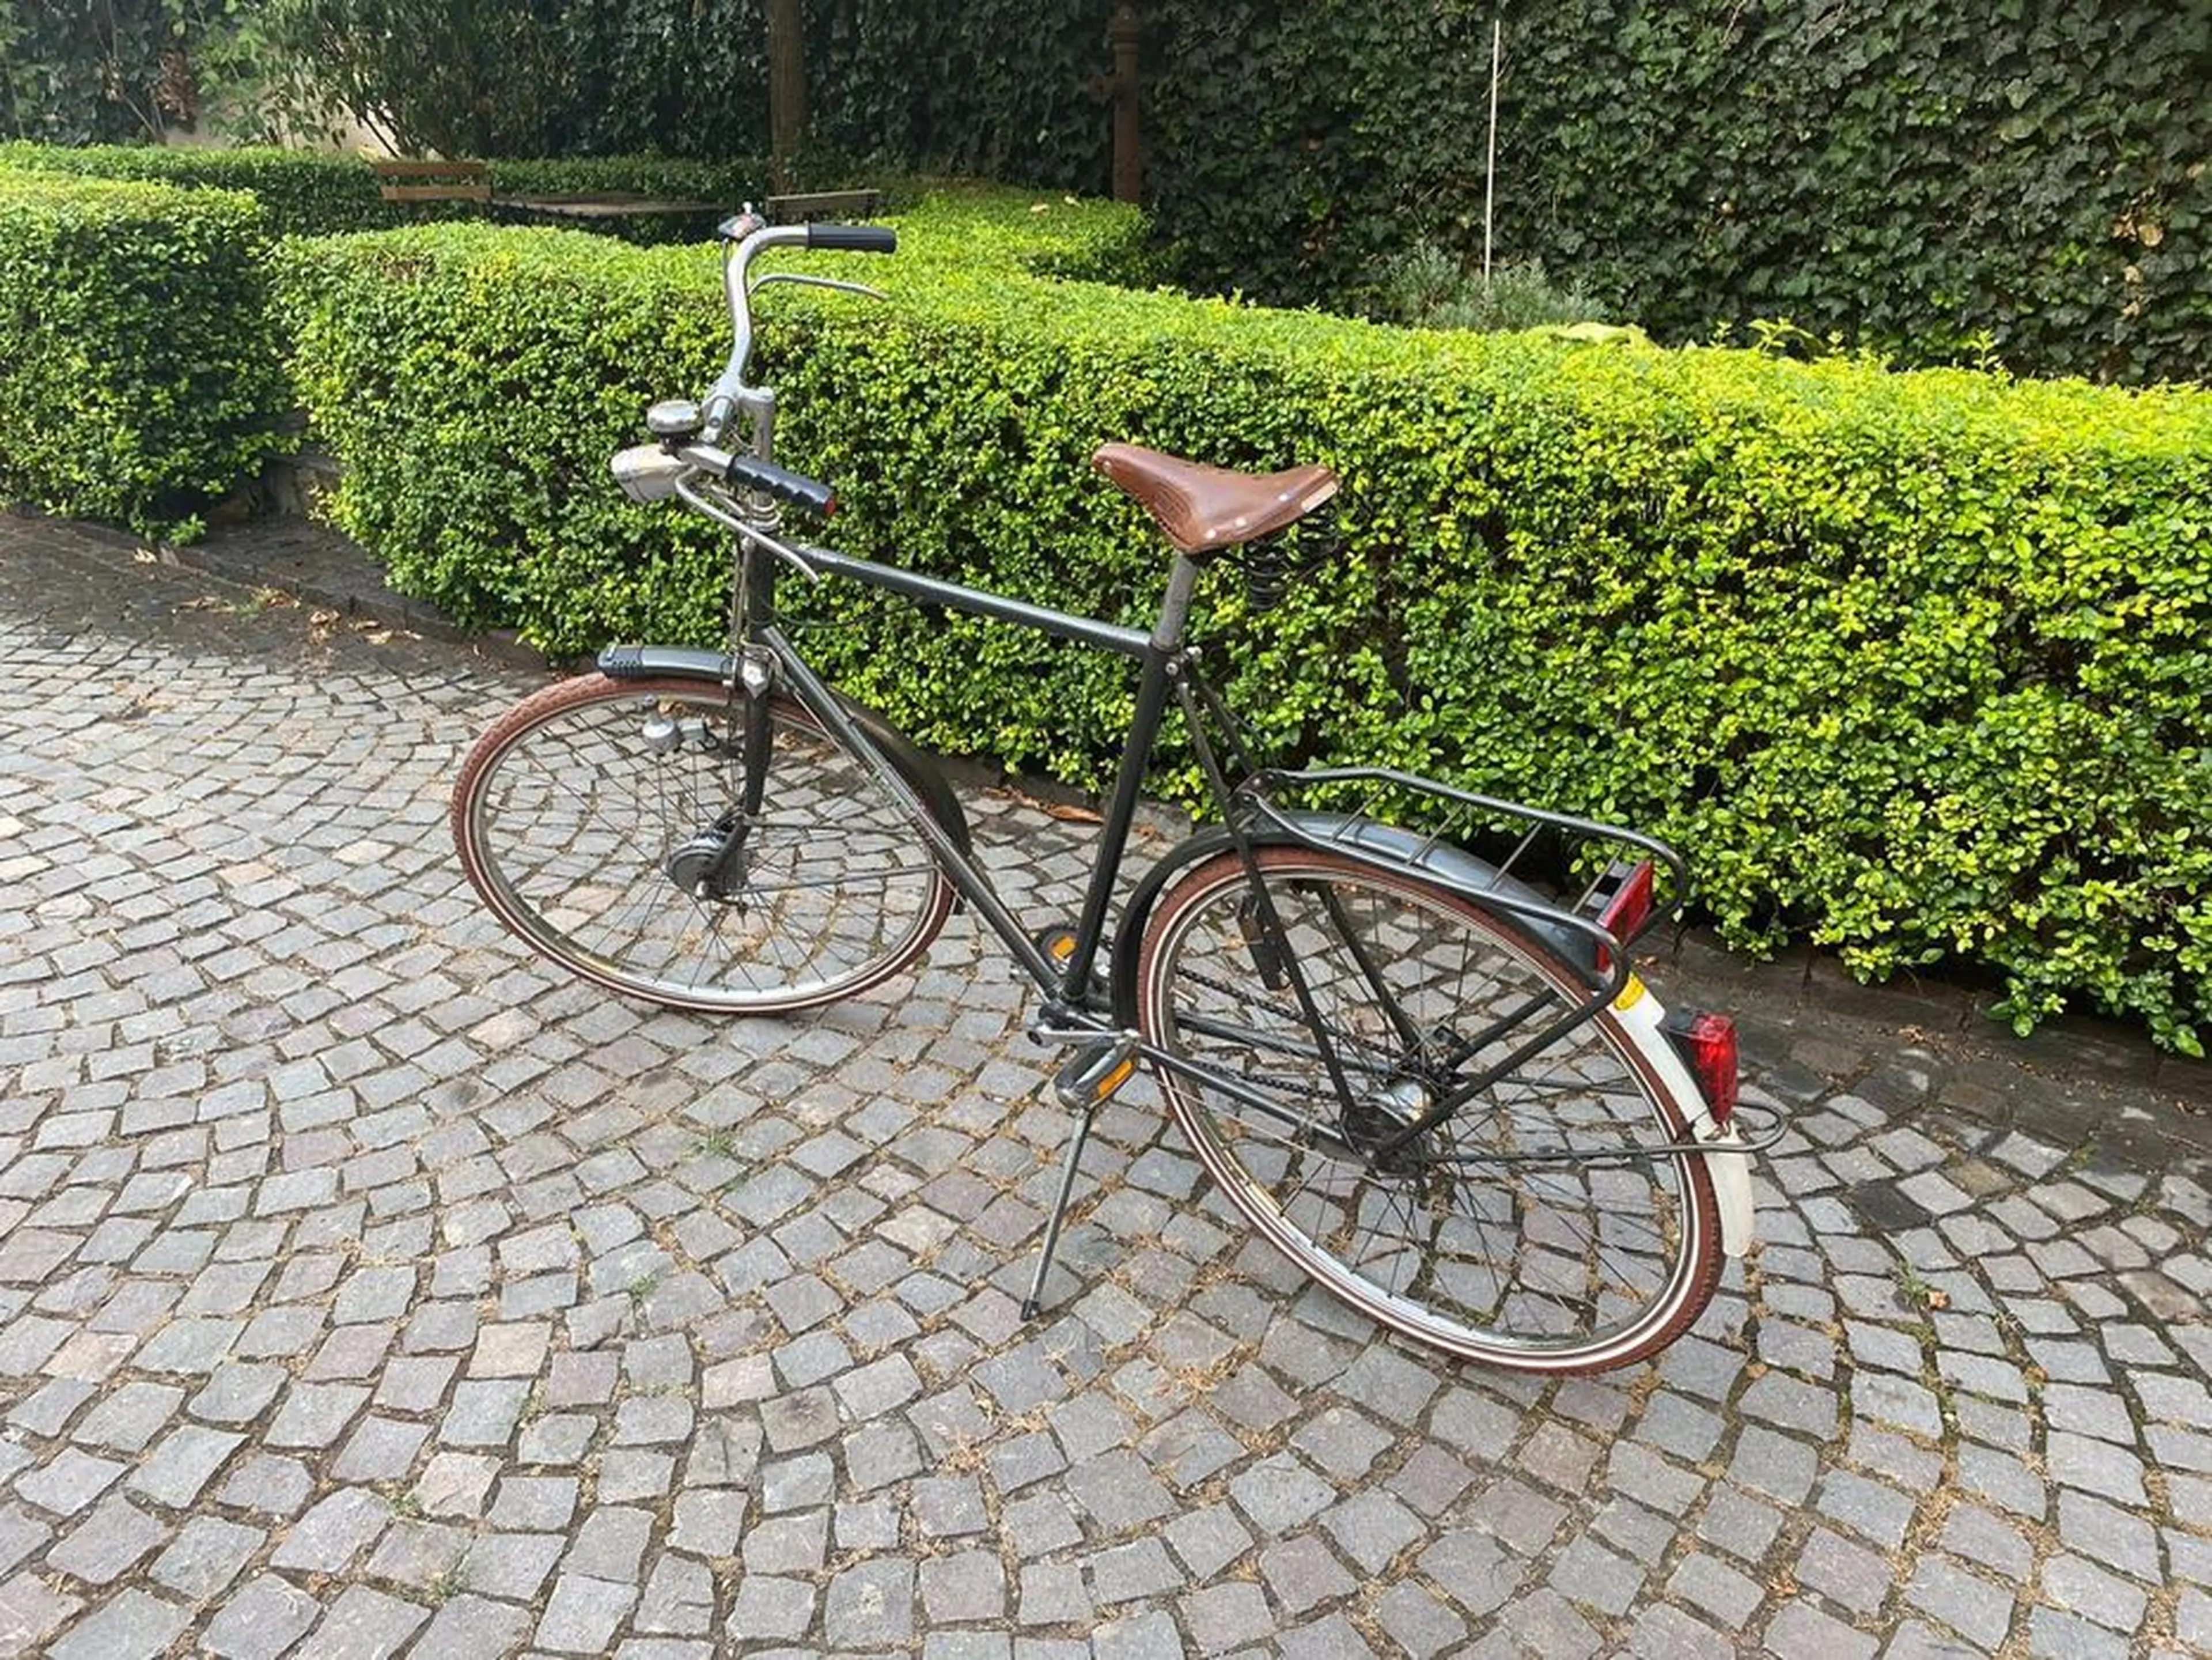 2. Bicicleta Union Retro 62cm